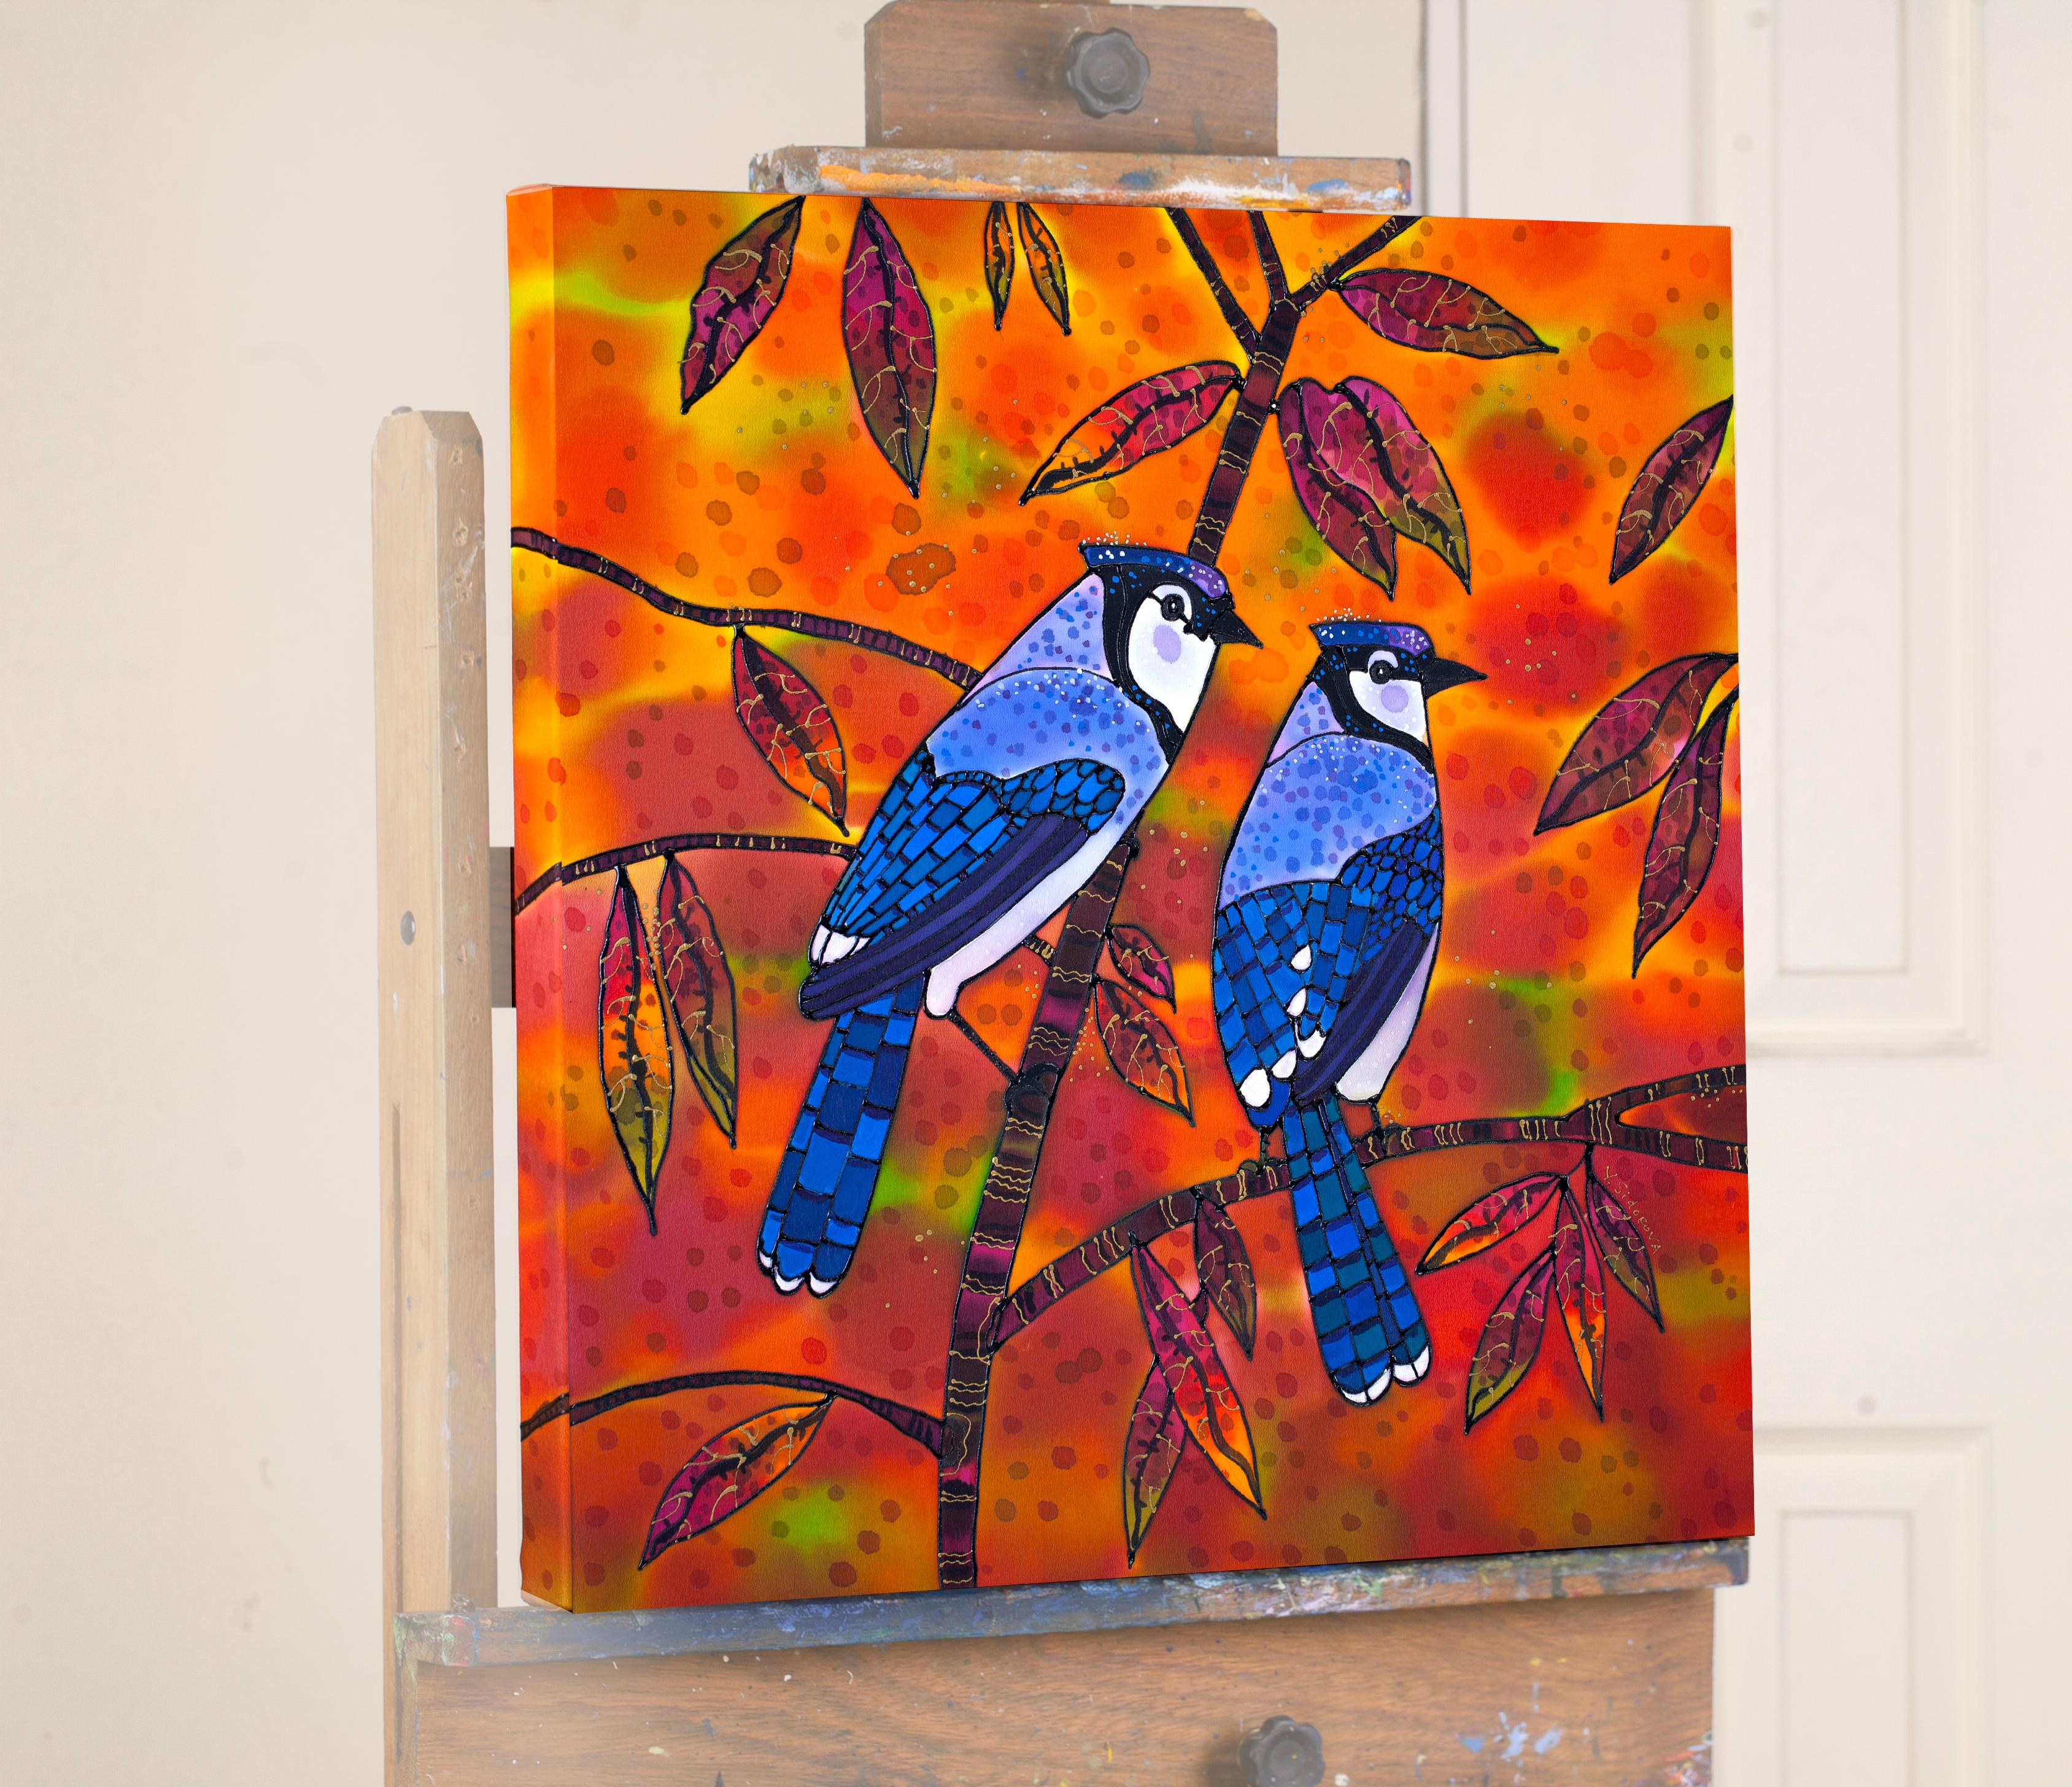 Blue Jays through the Prism of Autumn - Contemporary Mixed Media Art by Yelena Sidorova